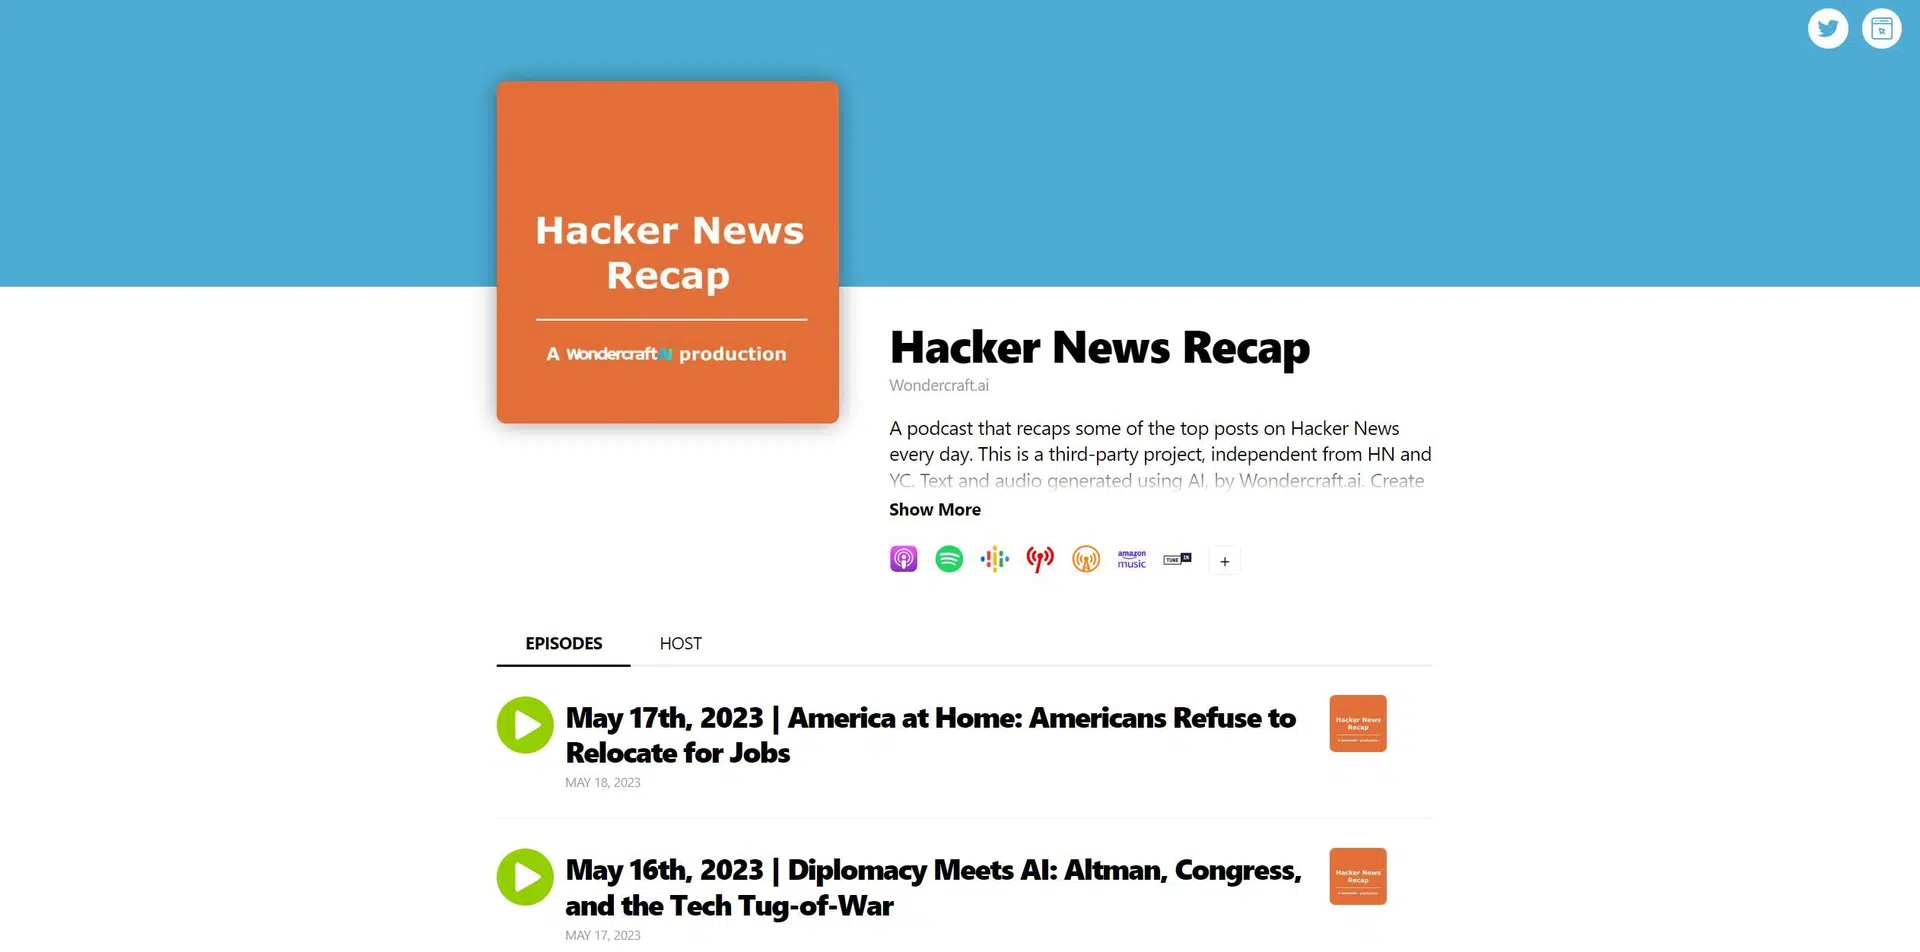 Hacker News Recapwebsite picture